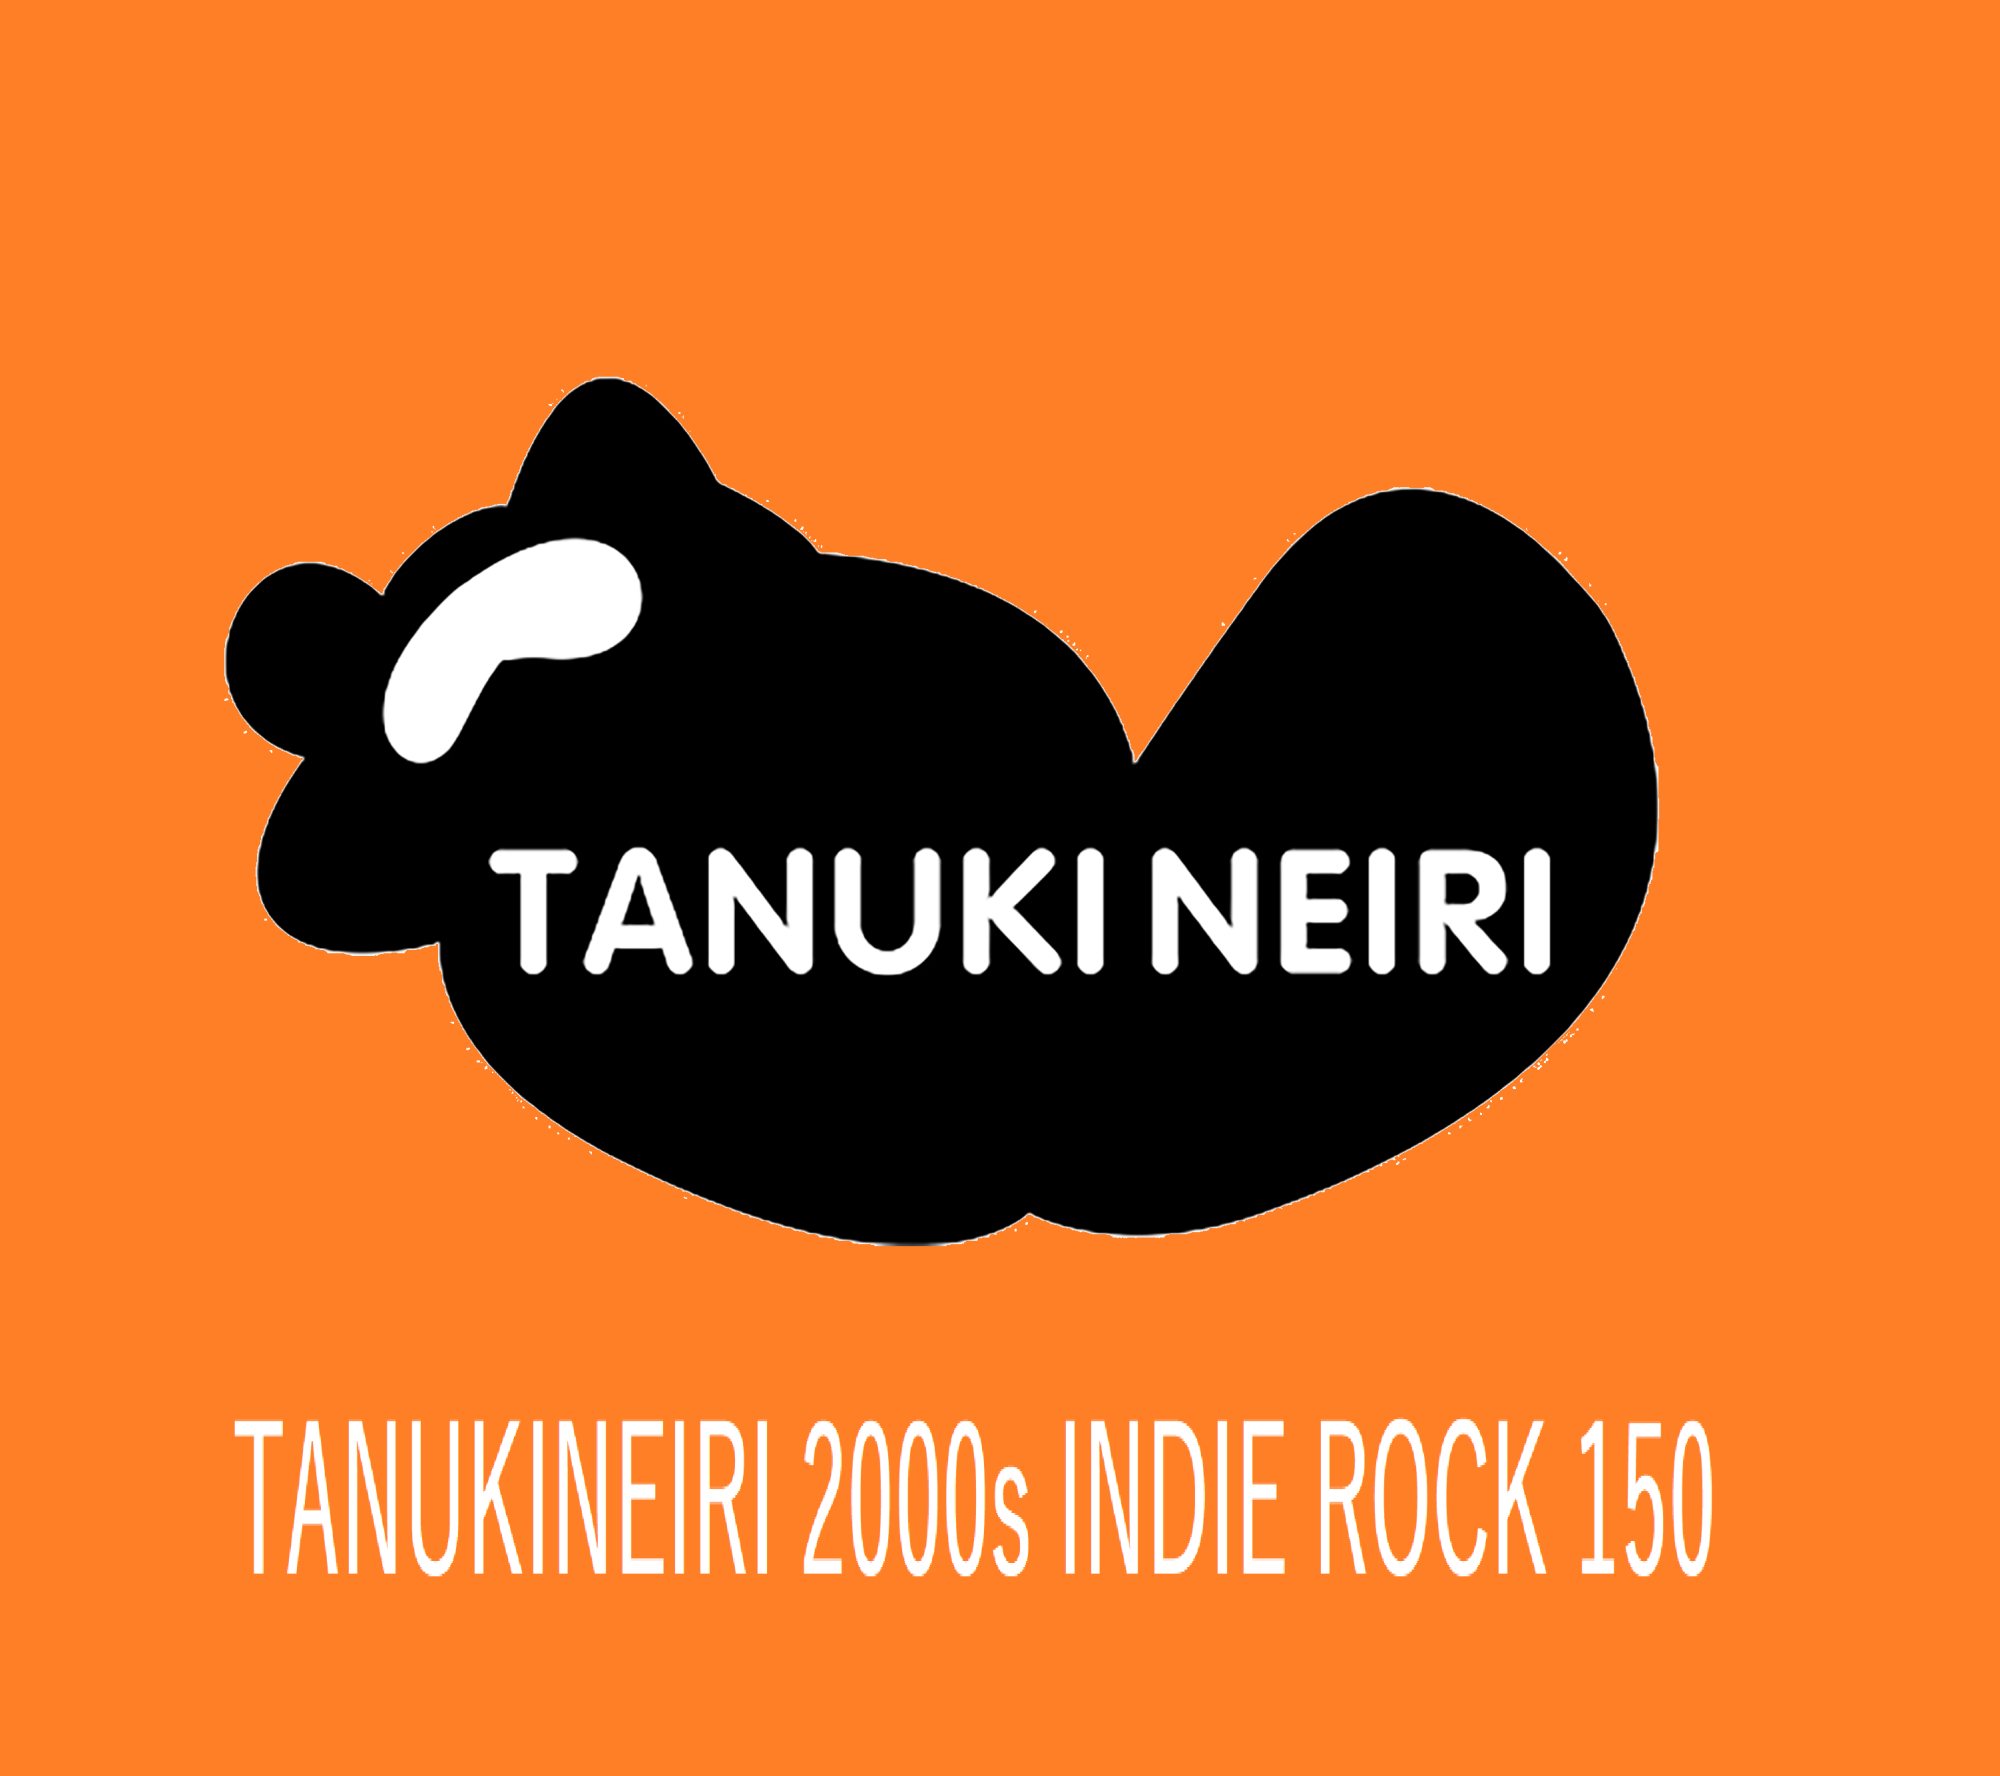 TANUKINEIRI 2000s INDIE ROCK 150